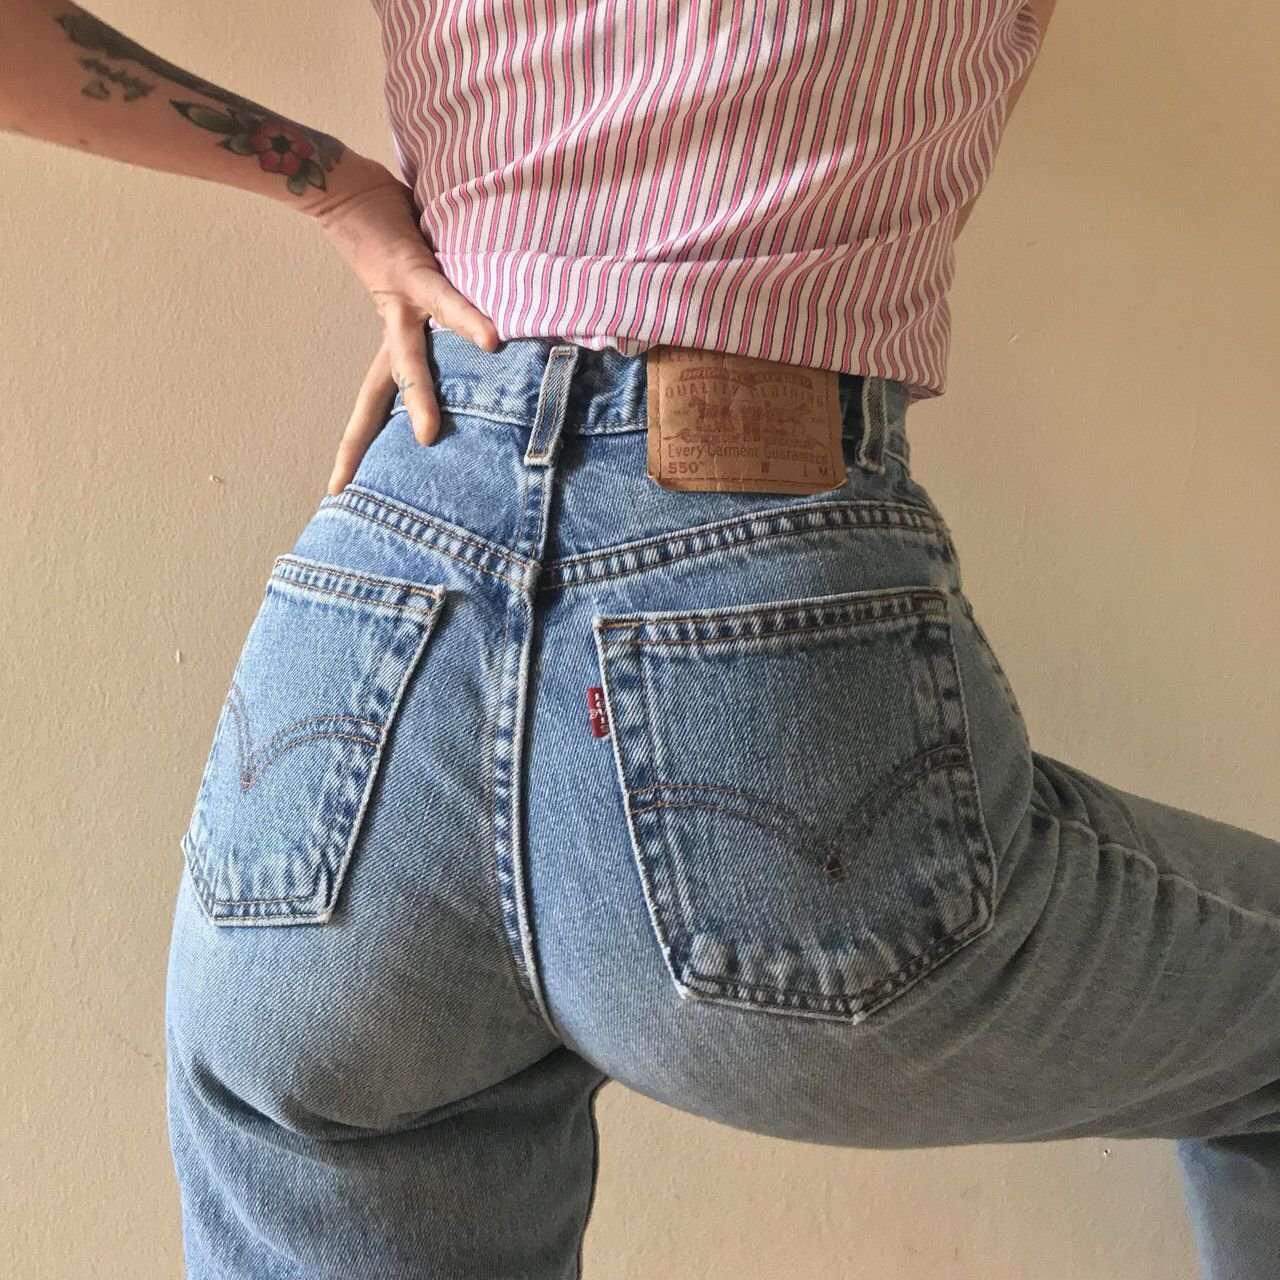 жопа девушек в джинсах (120) фото